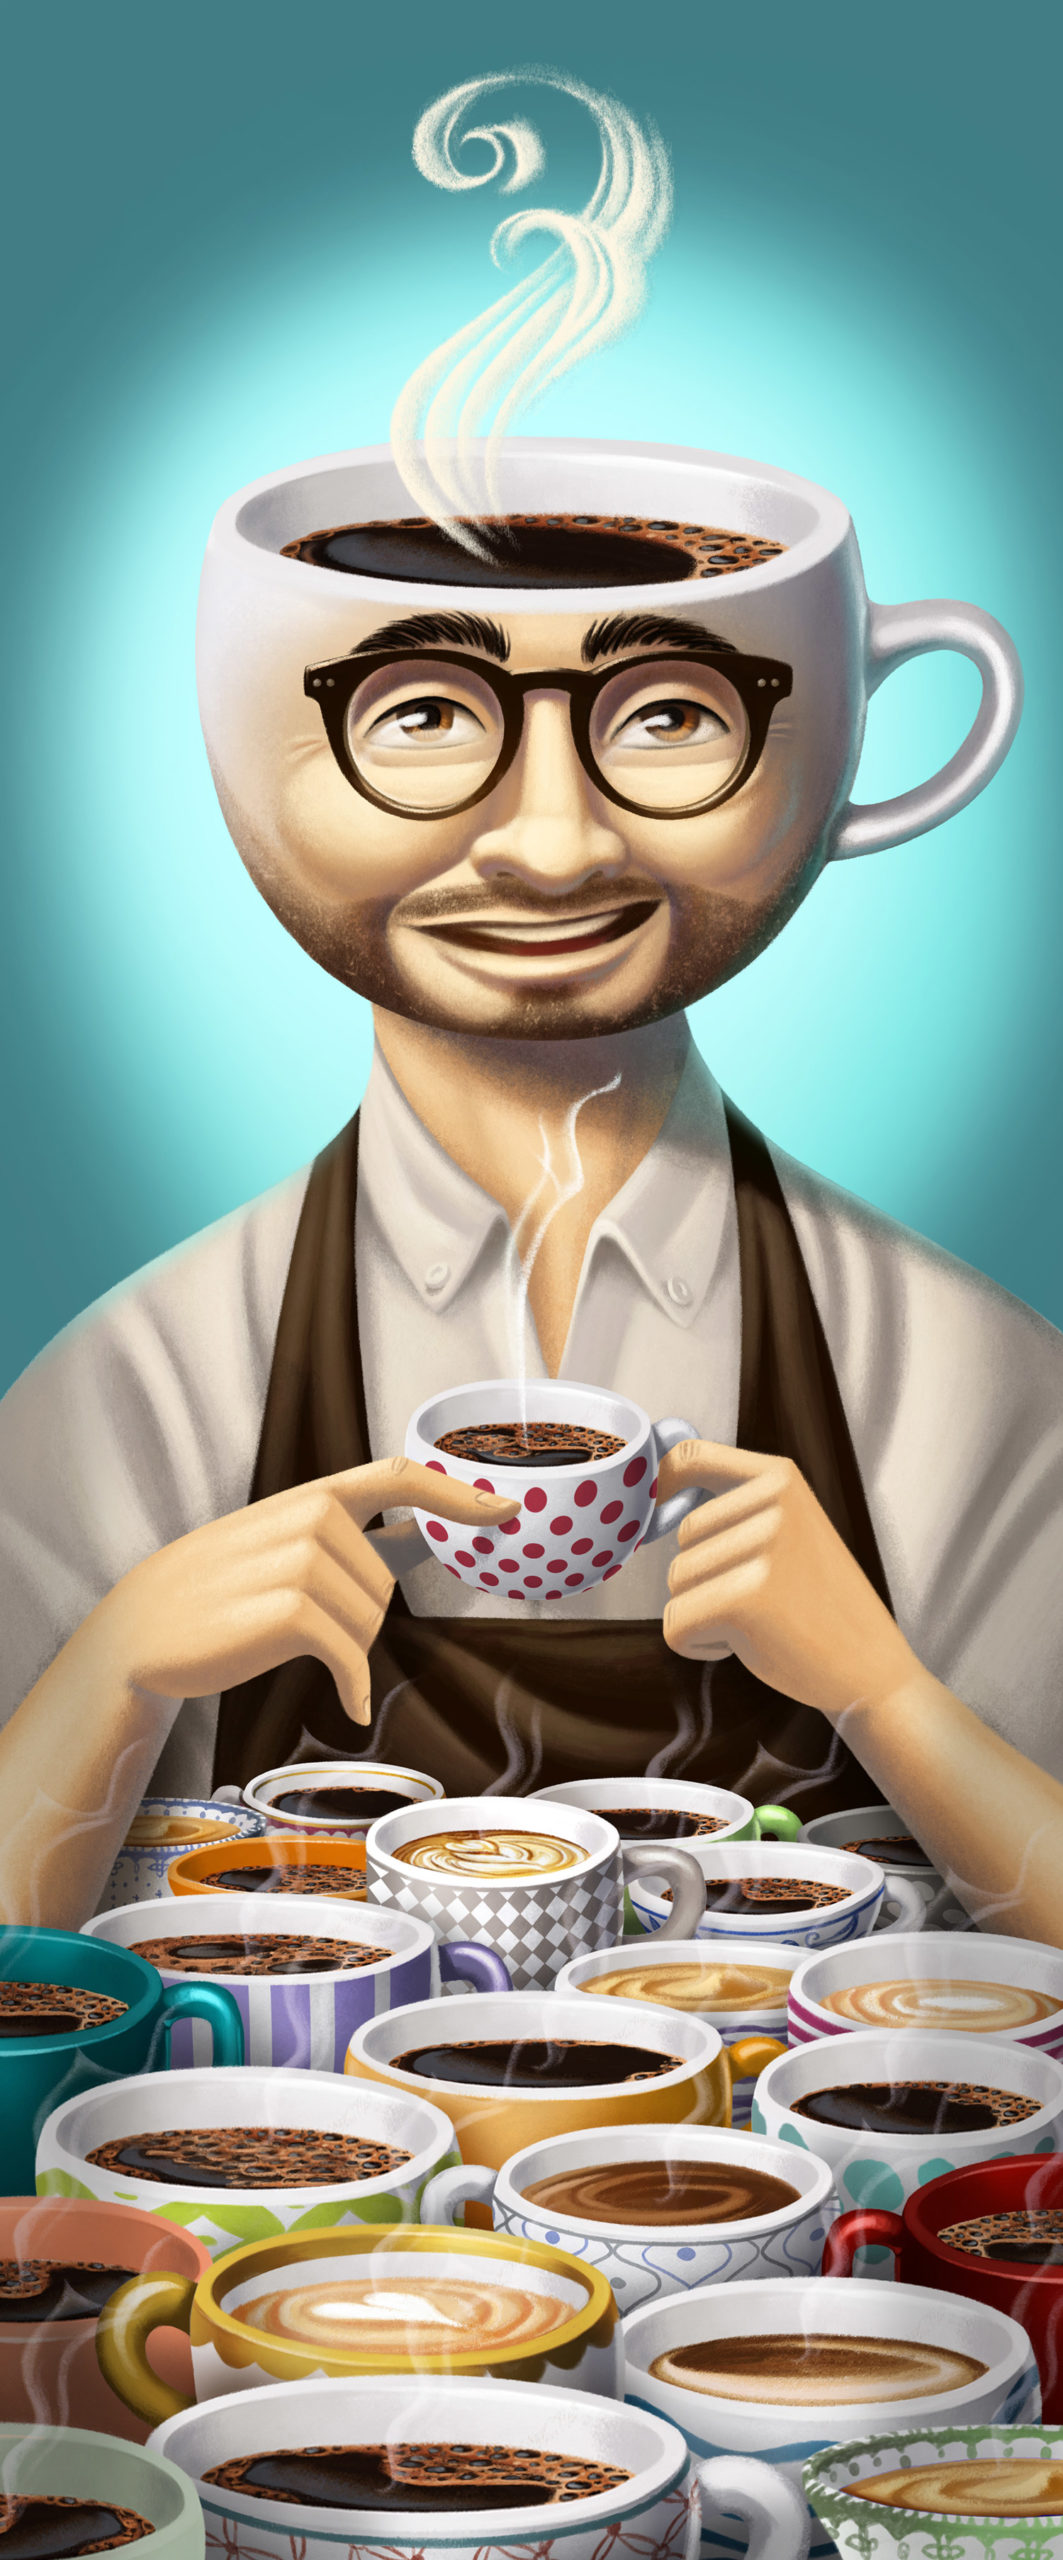 www.davidderamon.com - illustration - costa coffee